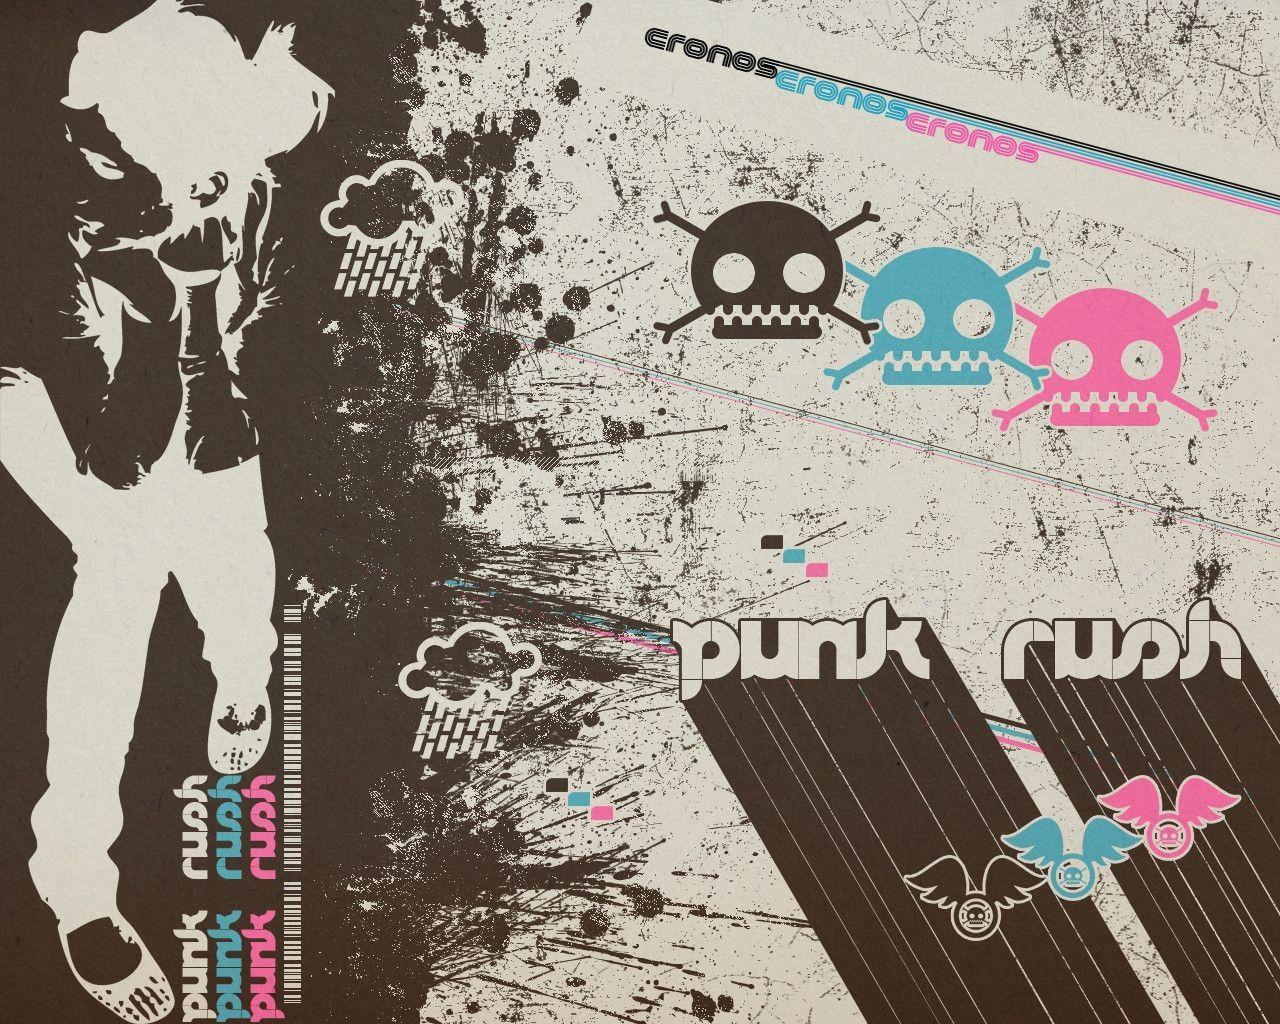 Punk Rush wallpaper from Punk wallpaper